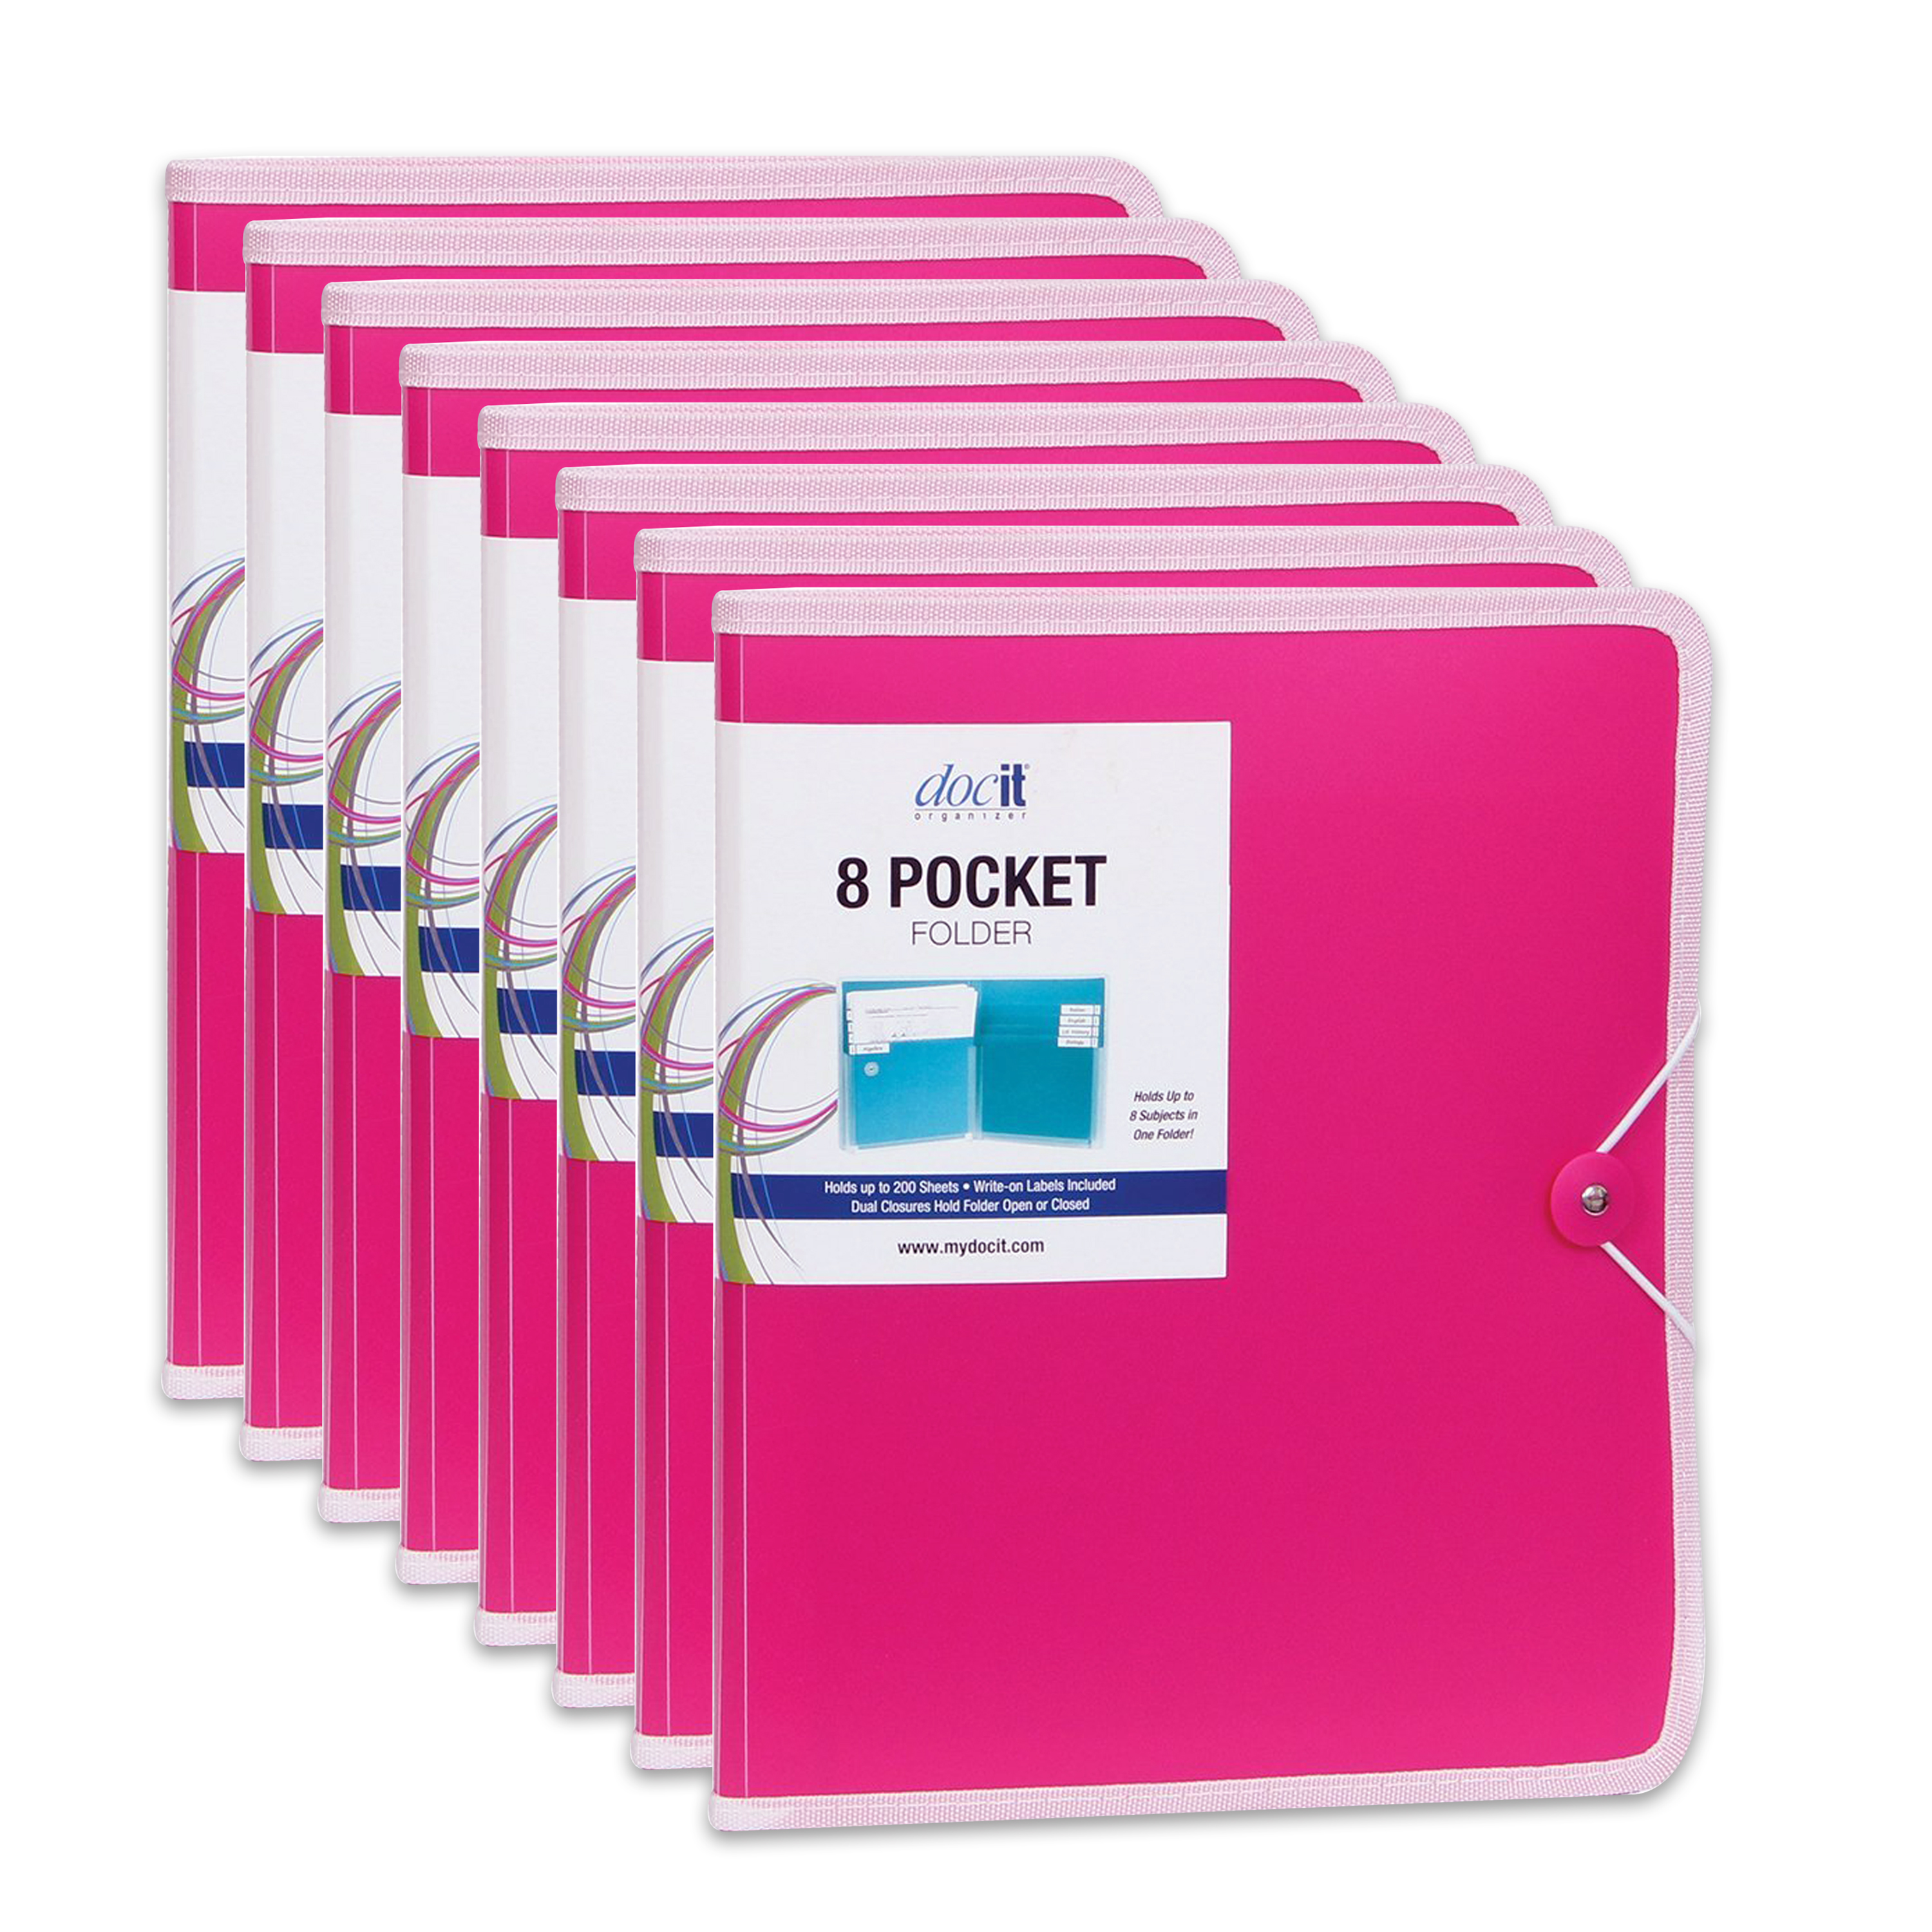 Admore pocket folders